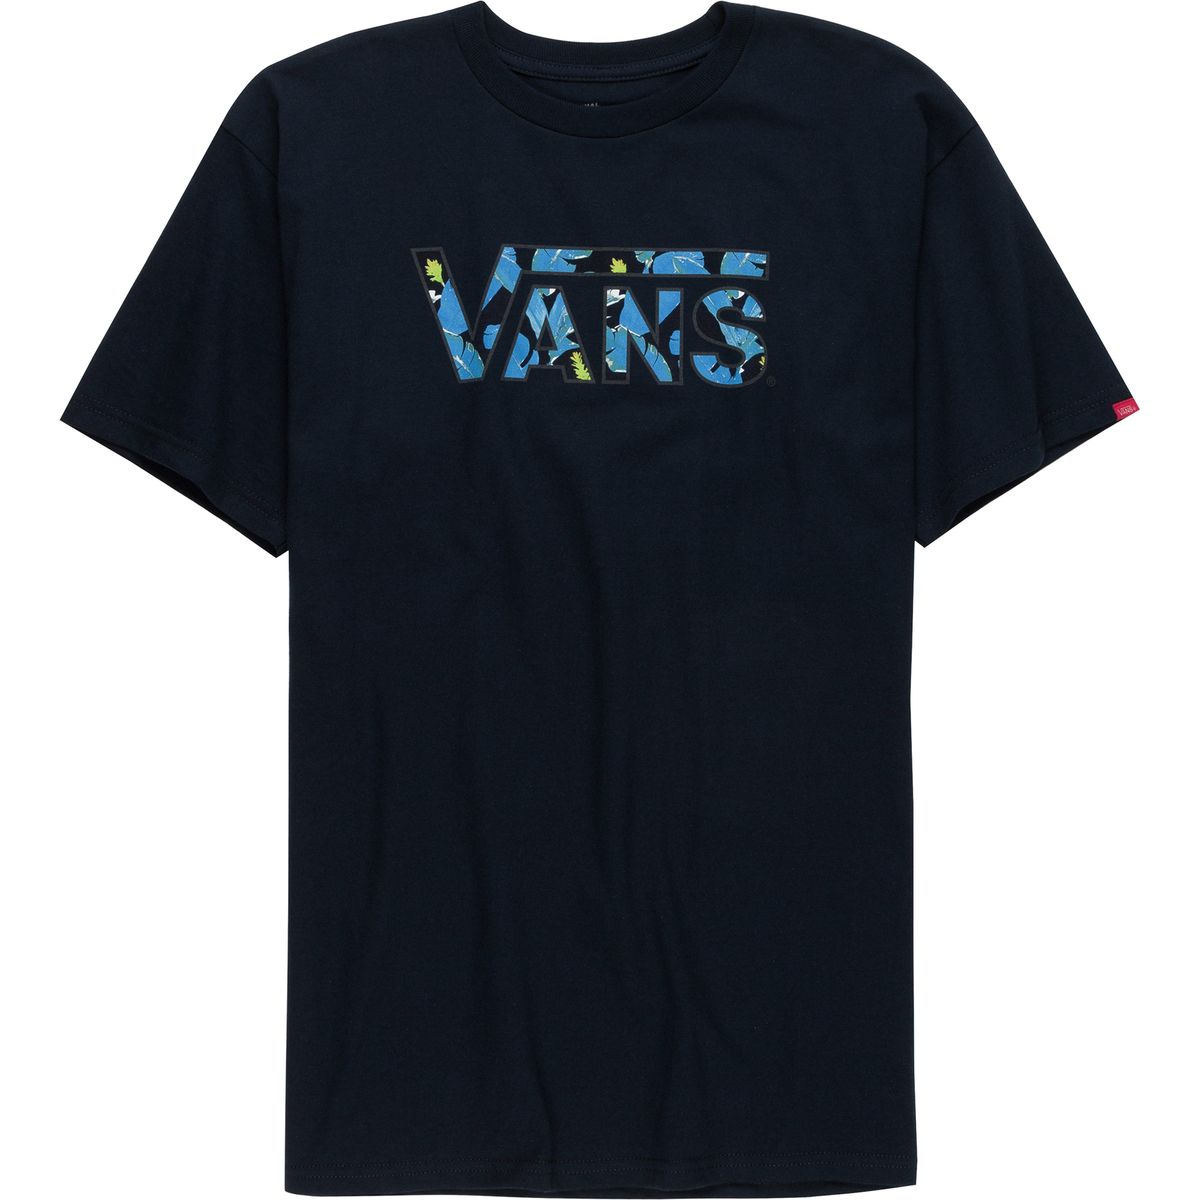 Vans Men's T-Shirts, stylish comfort clothing